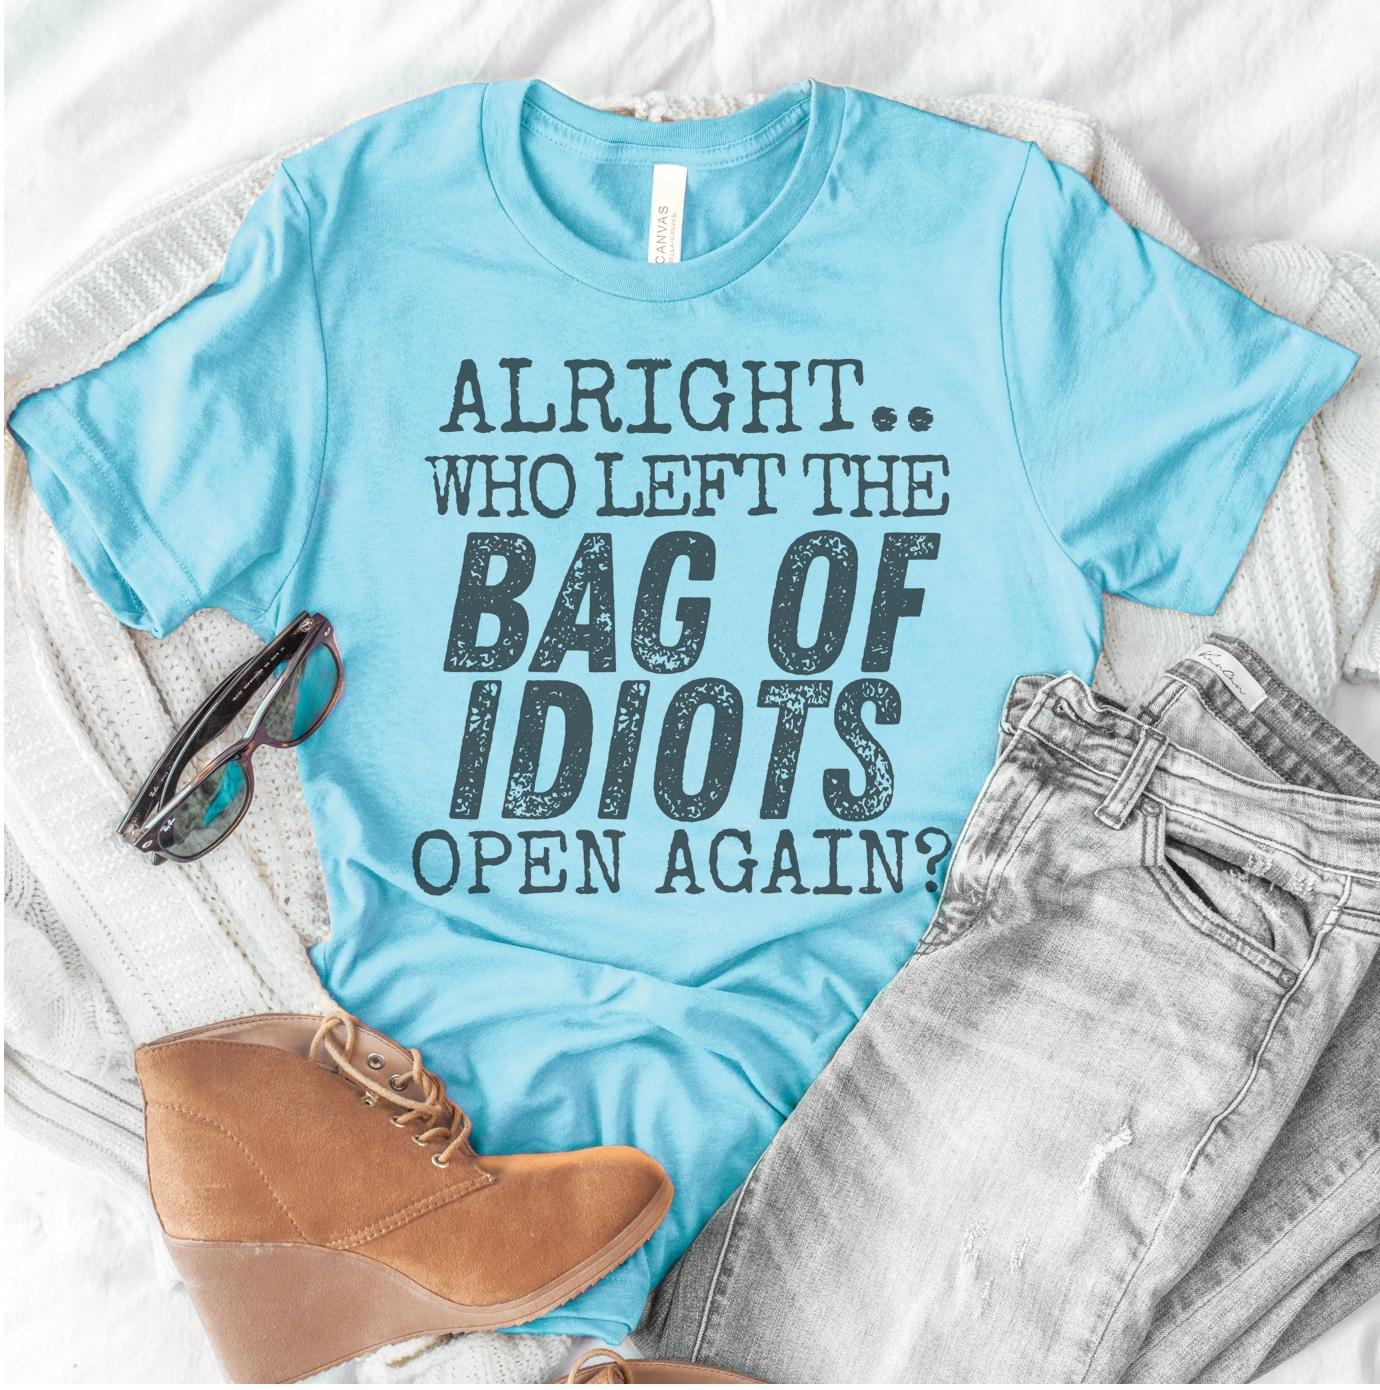 Bag Of Idiots Funny Short Sleeve T-Shirt